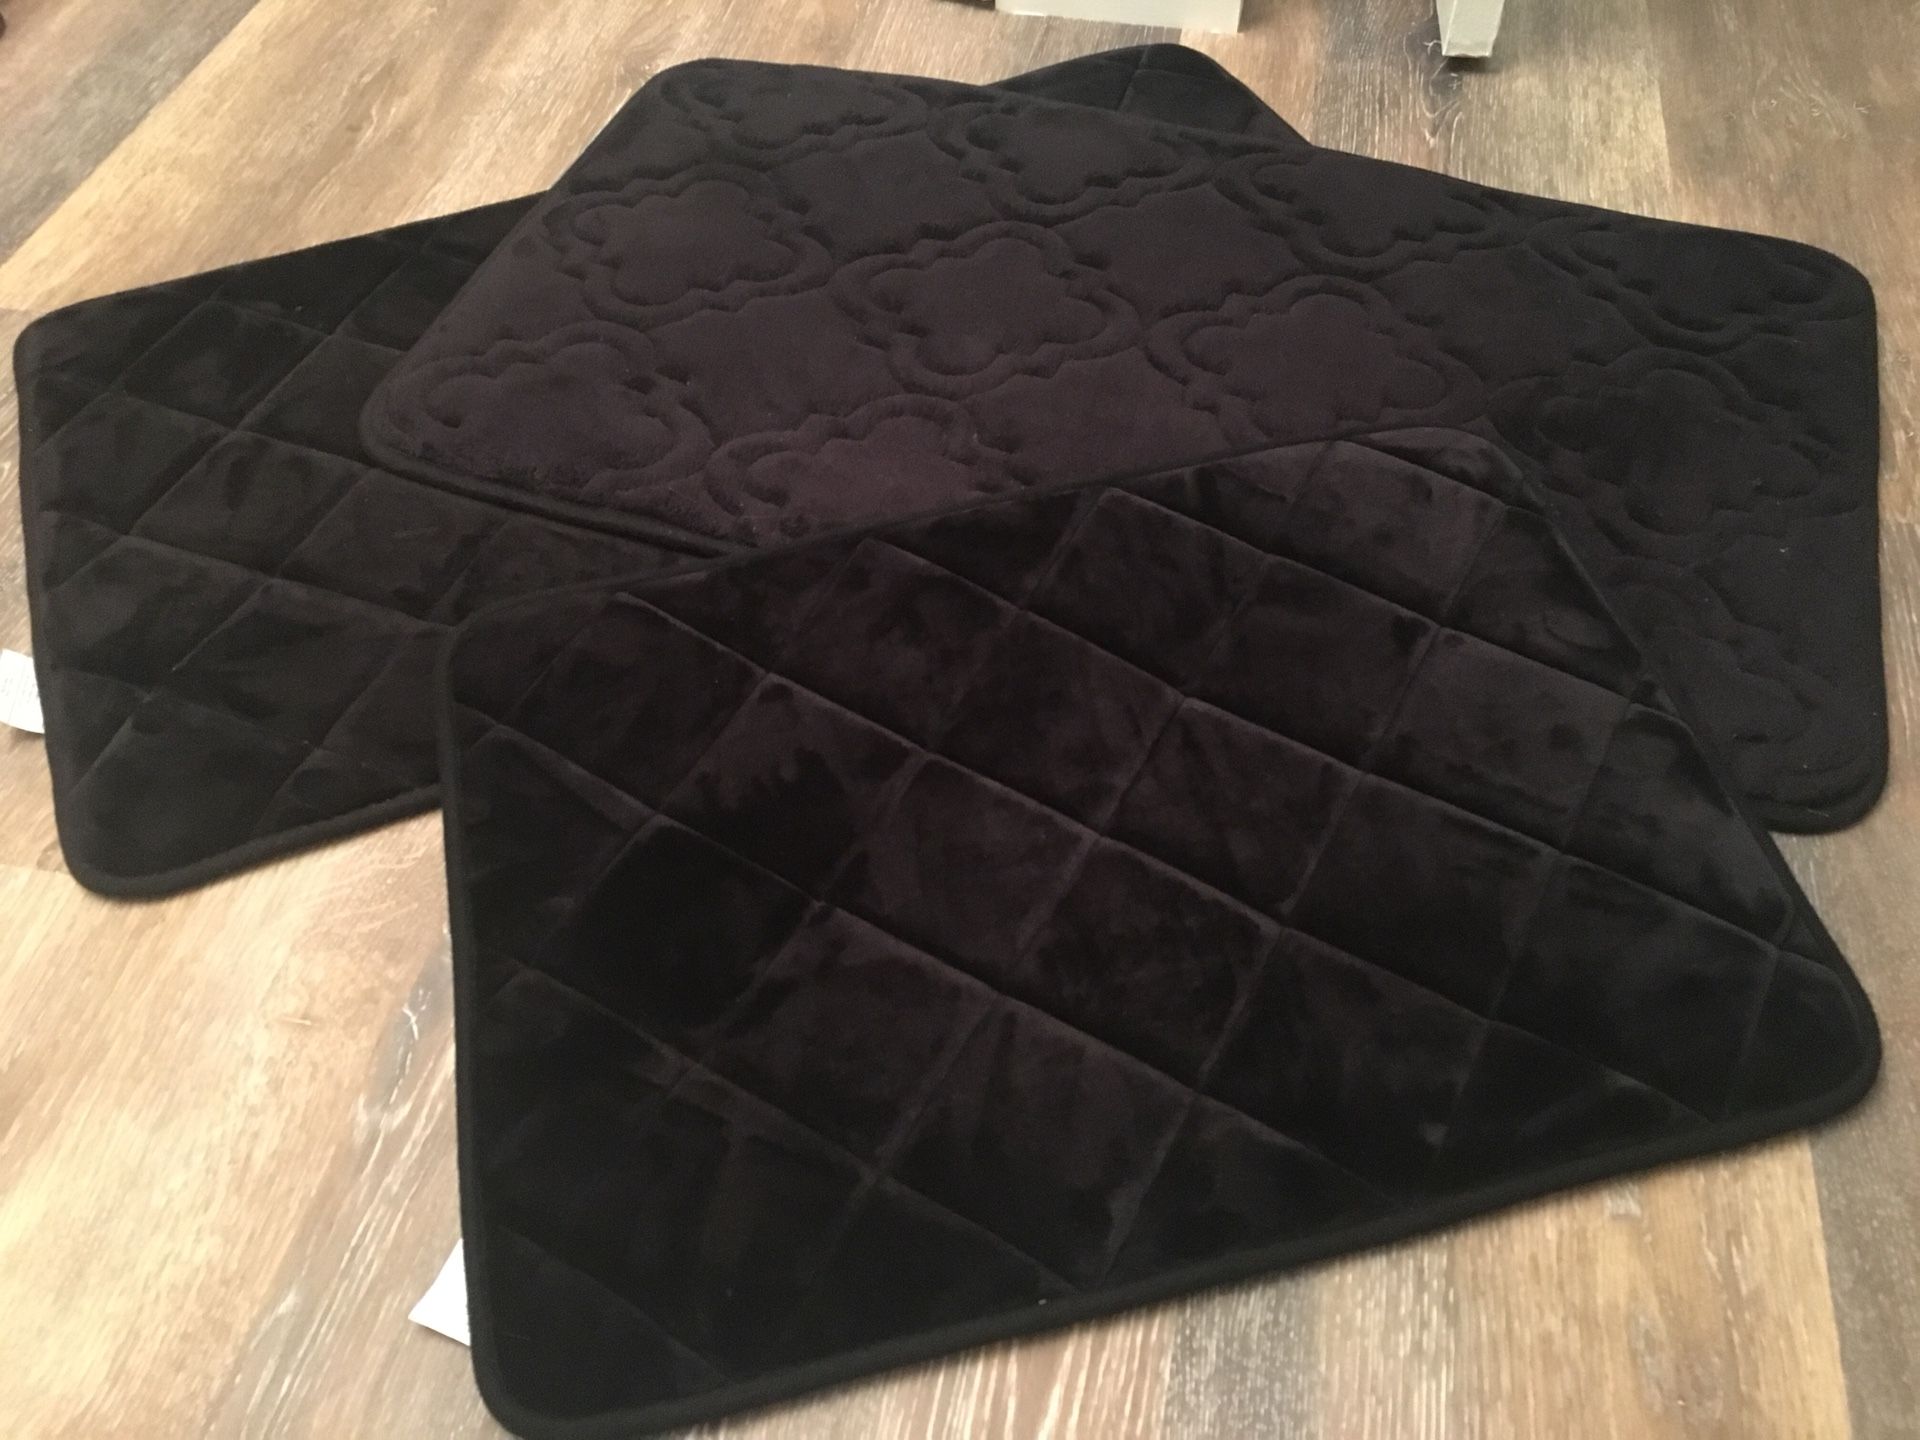 Three black padded kitchen or bath mats